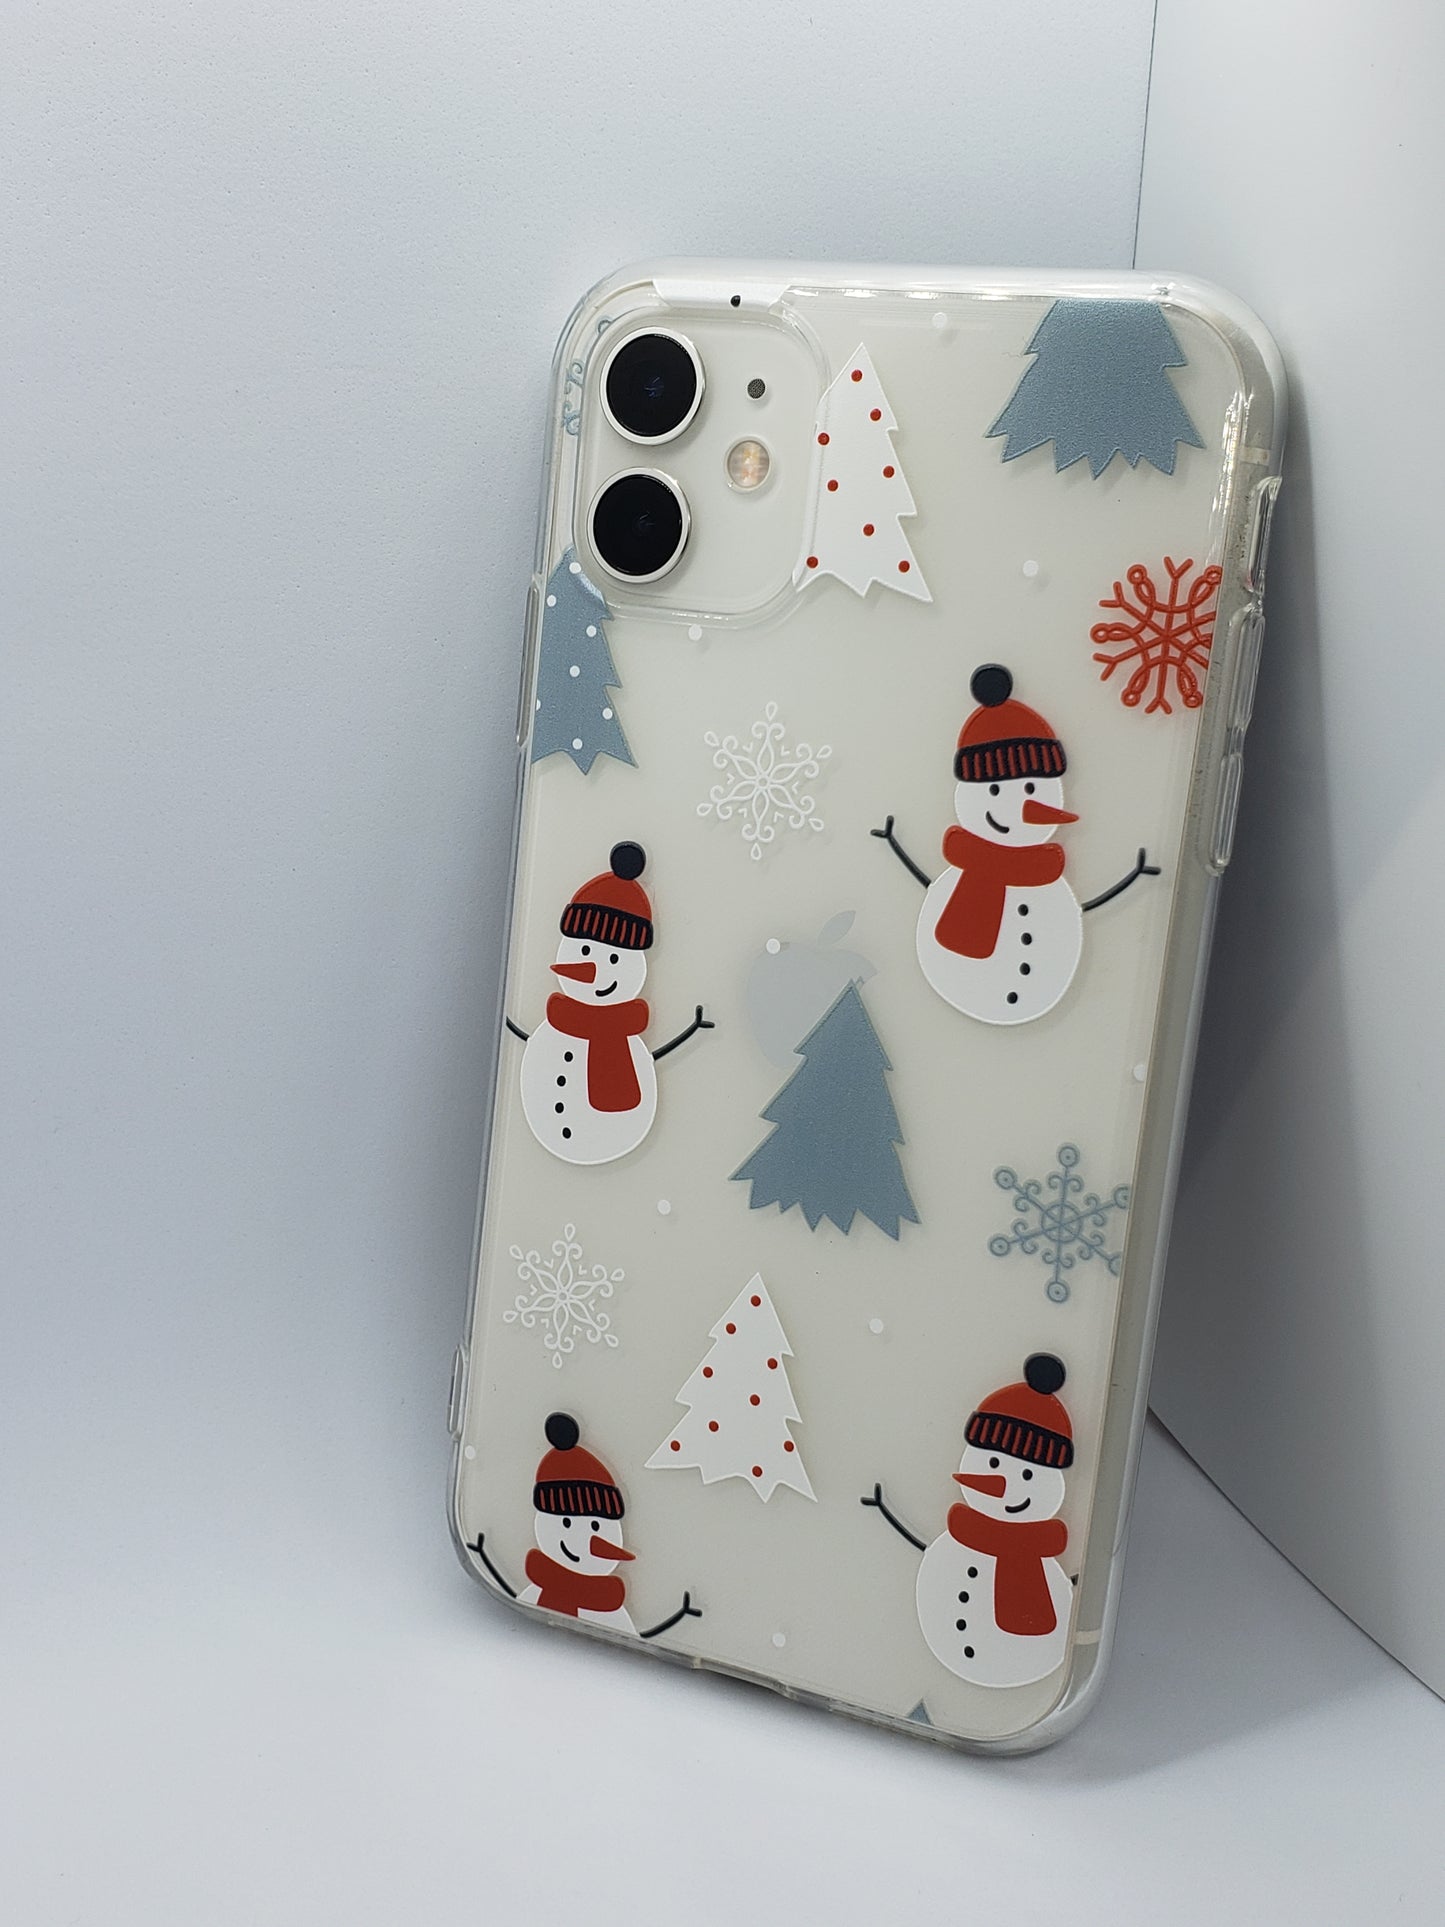 Coque iPhone transparente bonhomme de neige de Noël